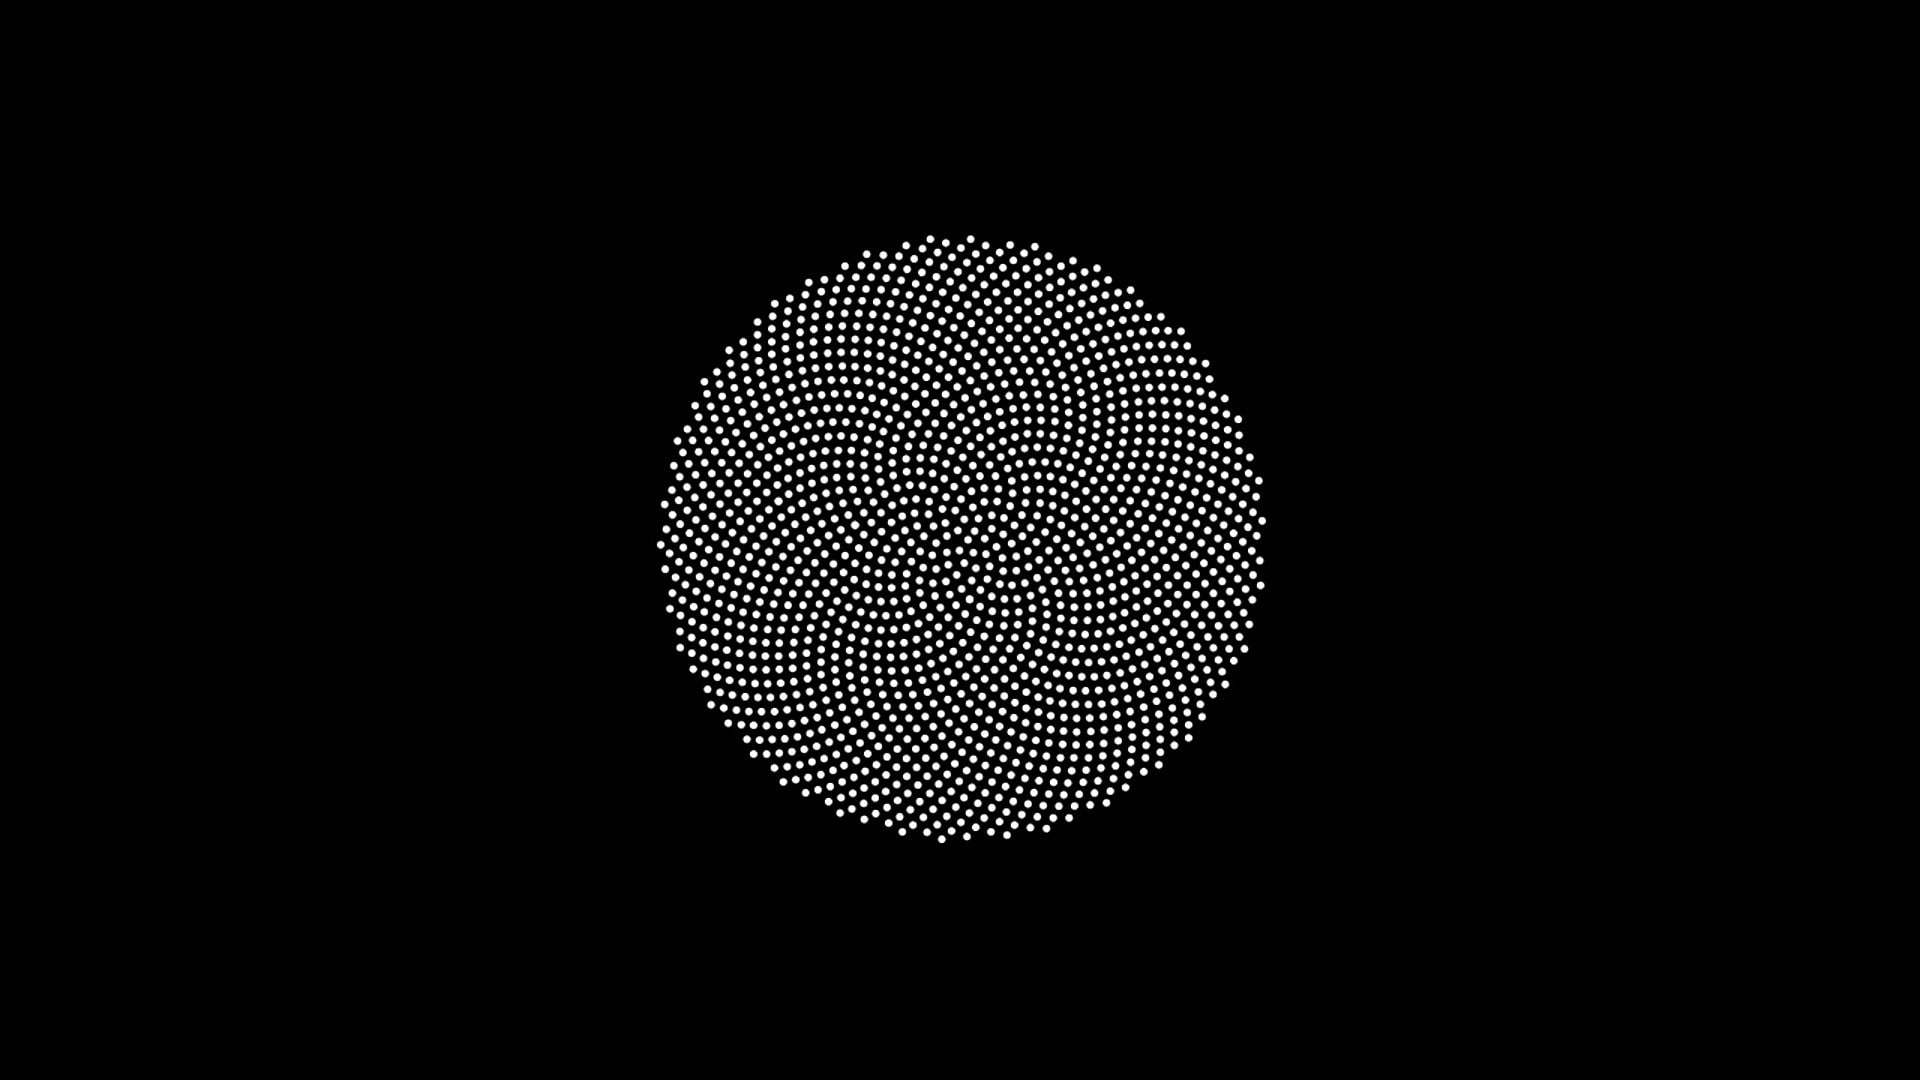 golden ratio, Fibonacci sequence, minimalism